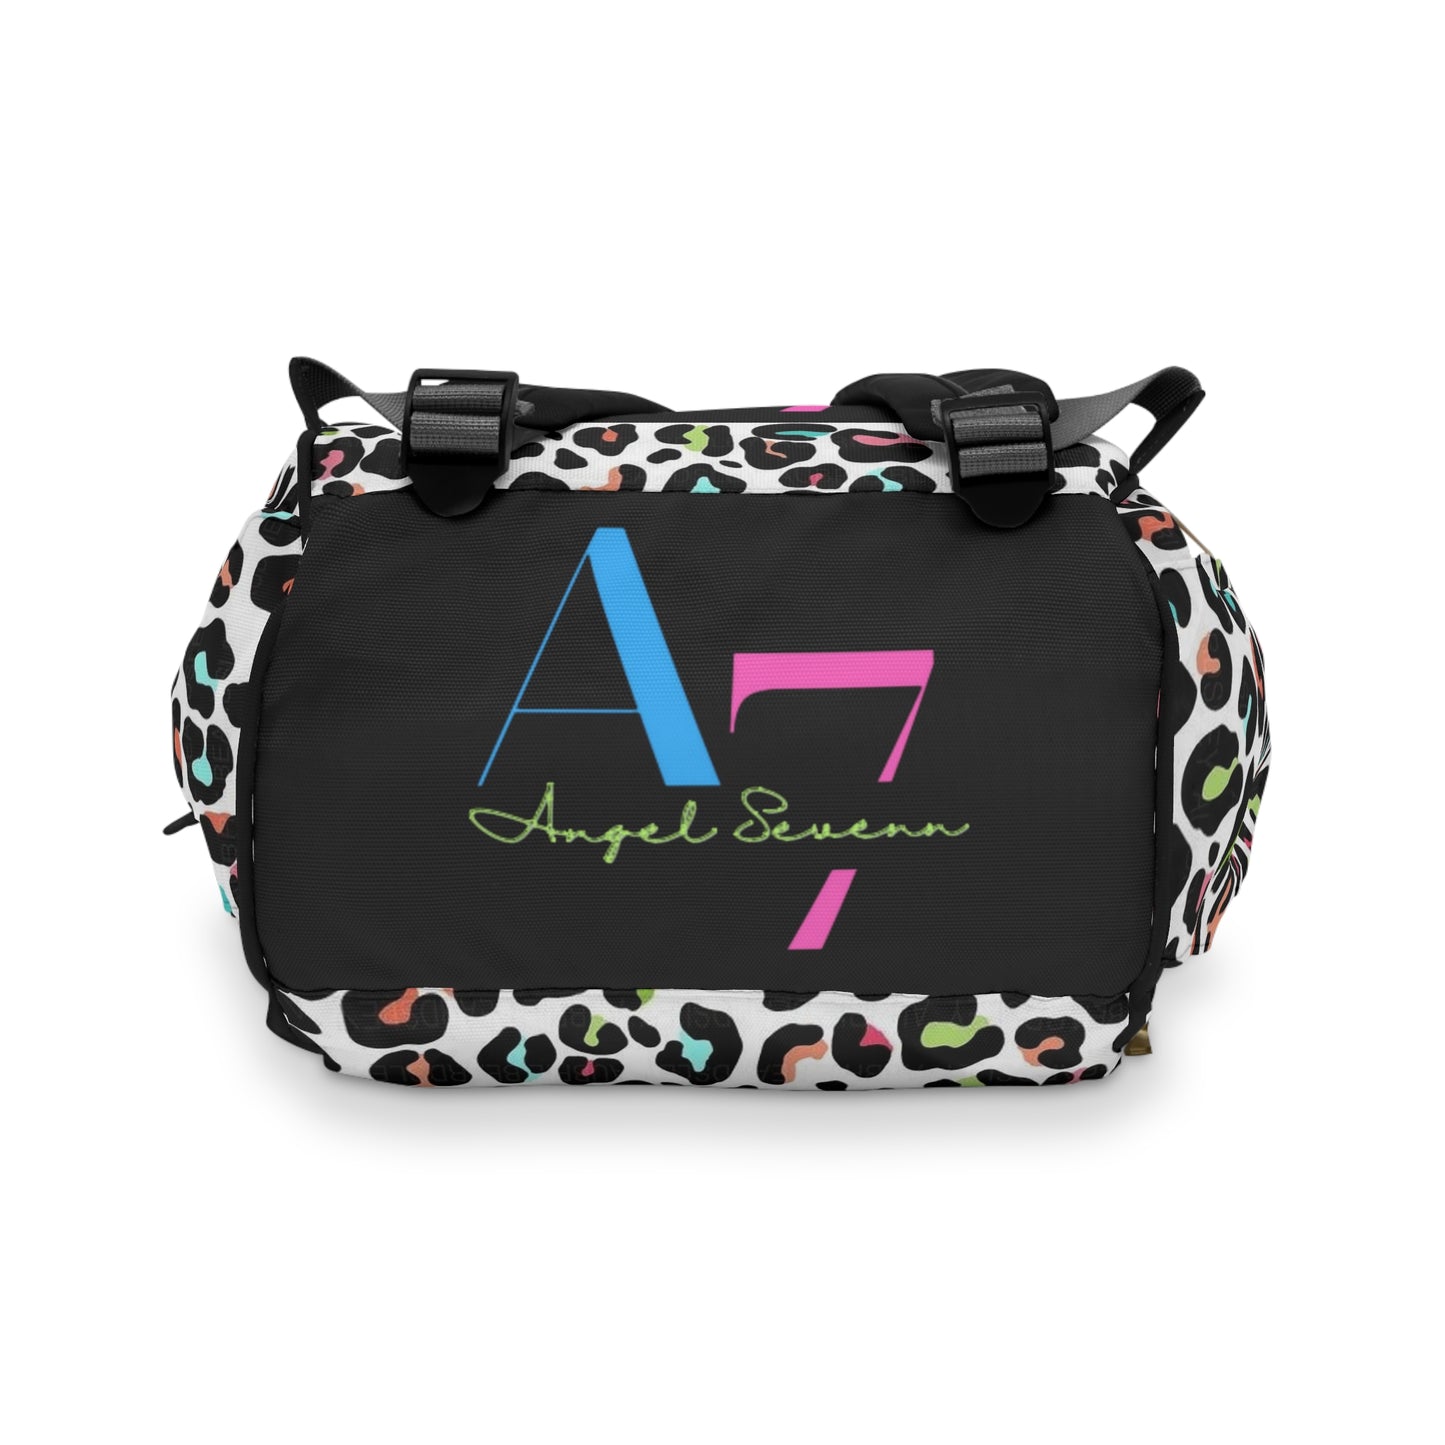 😇Angel Sevenn Leopard Fashion Multifunctional Diaper Backpack